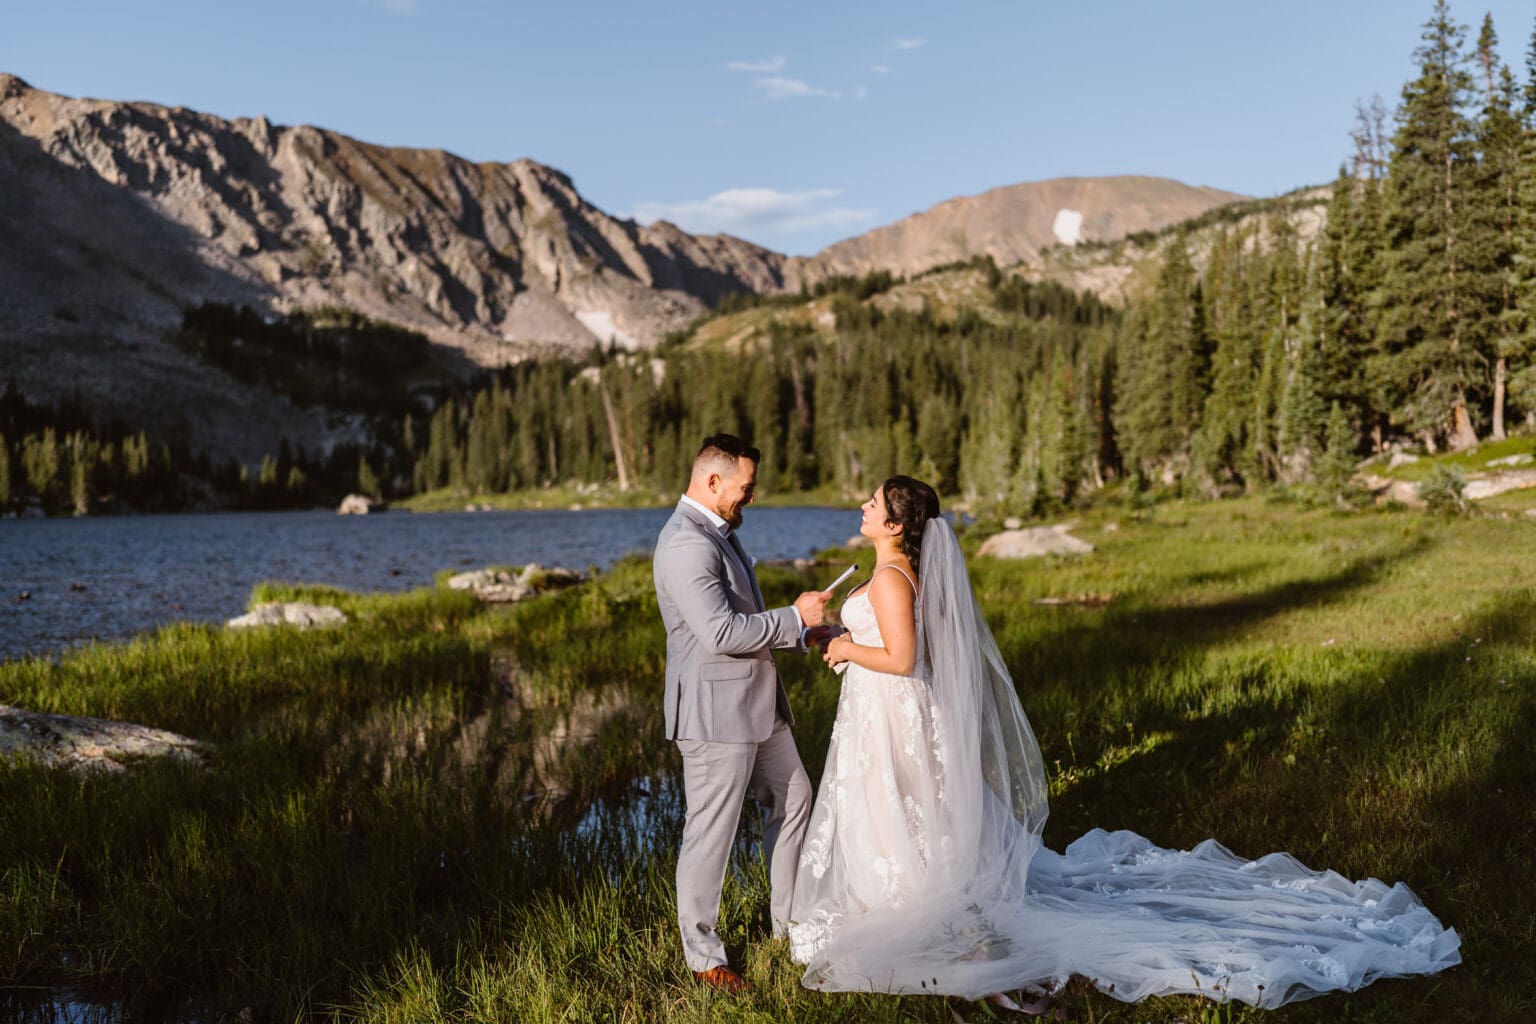 Couple sharing their vows at sunrise near an alpine lake during their Self-Solemnization.